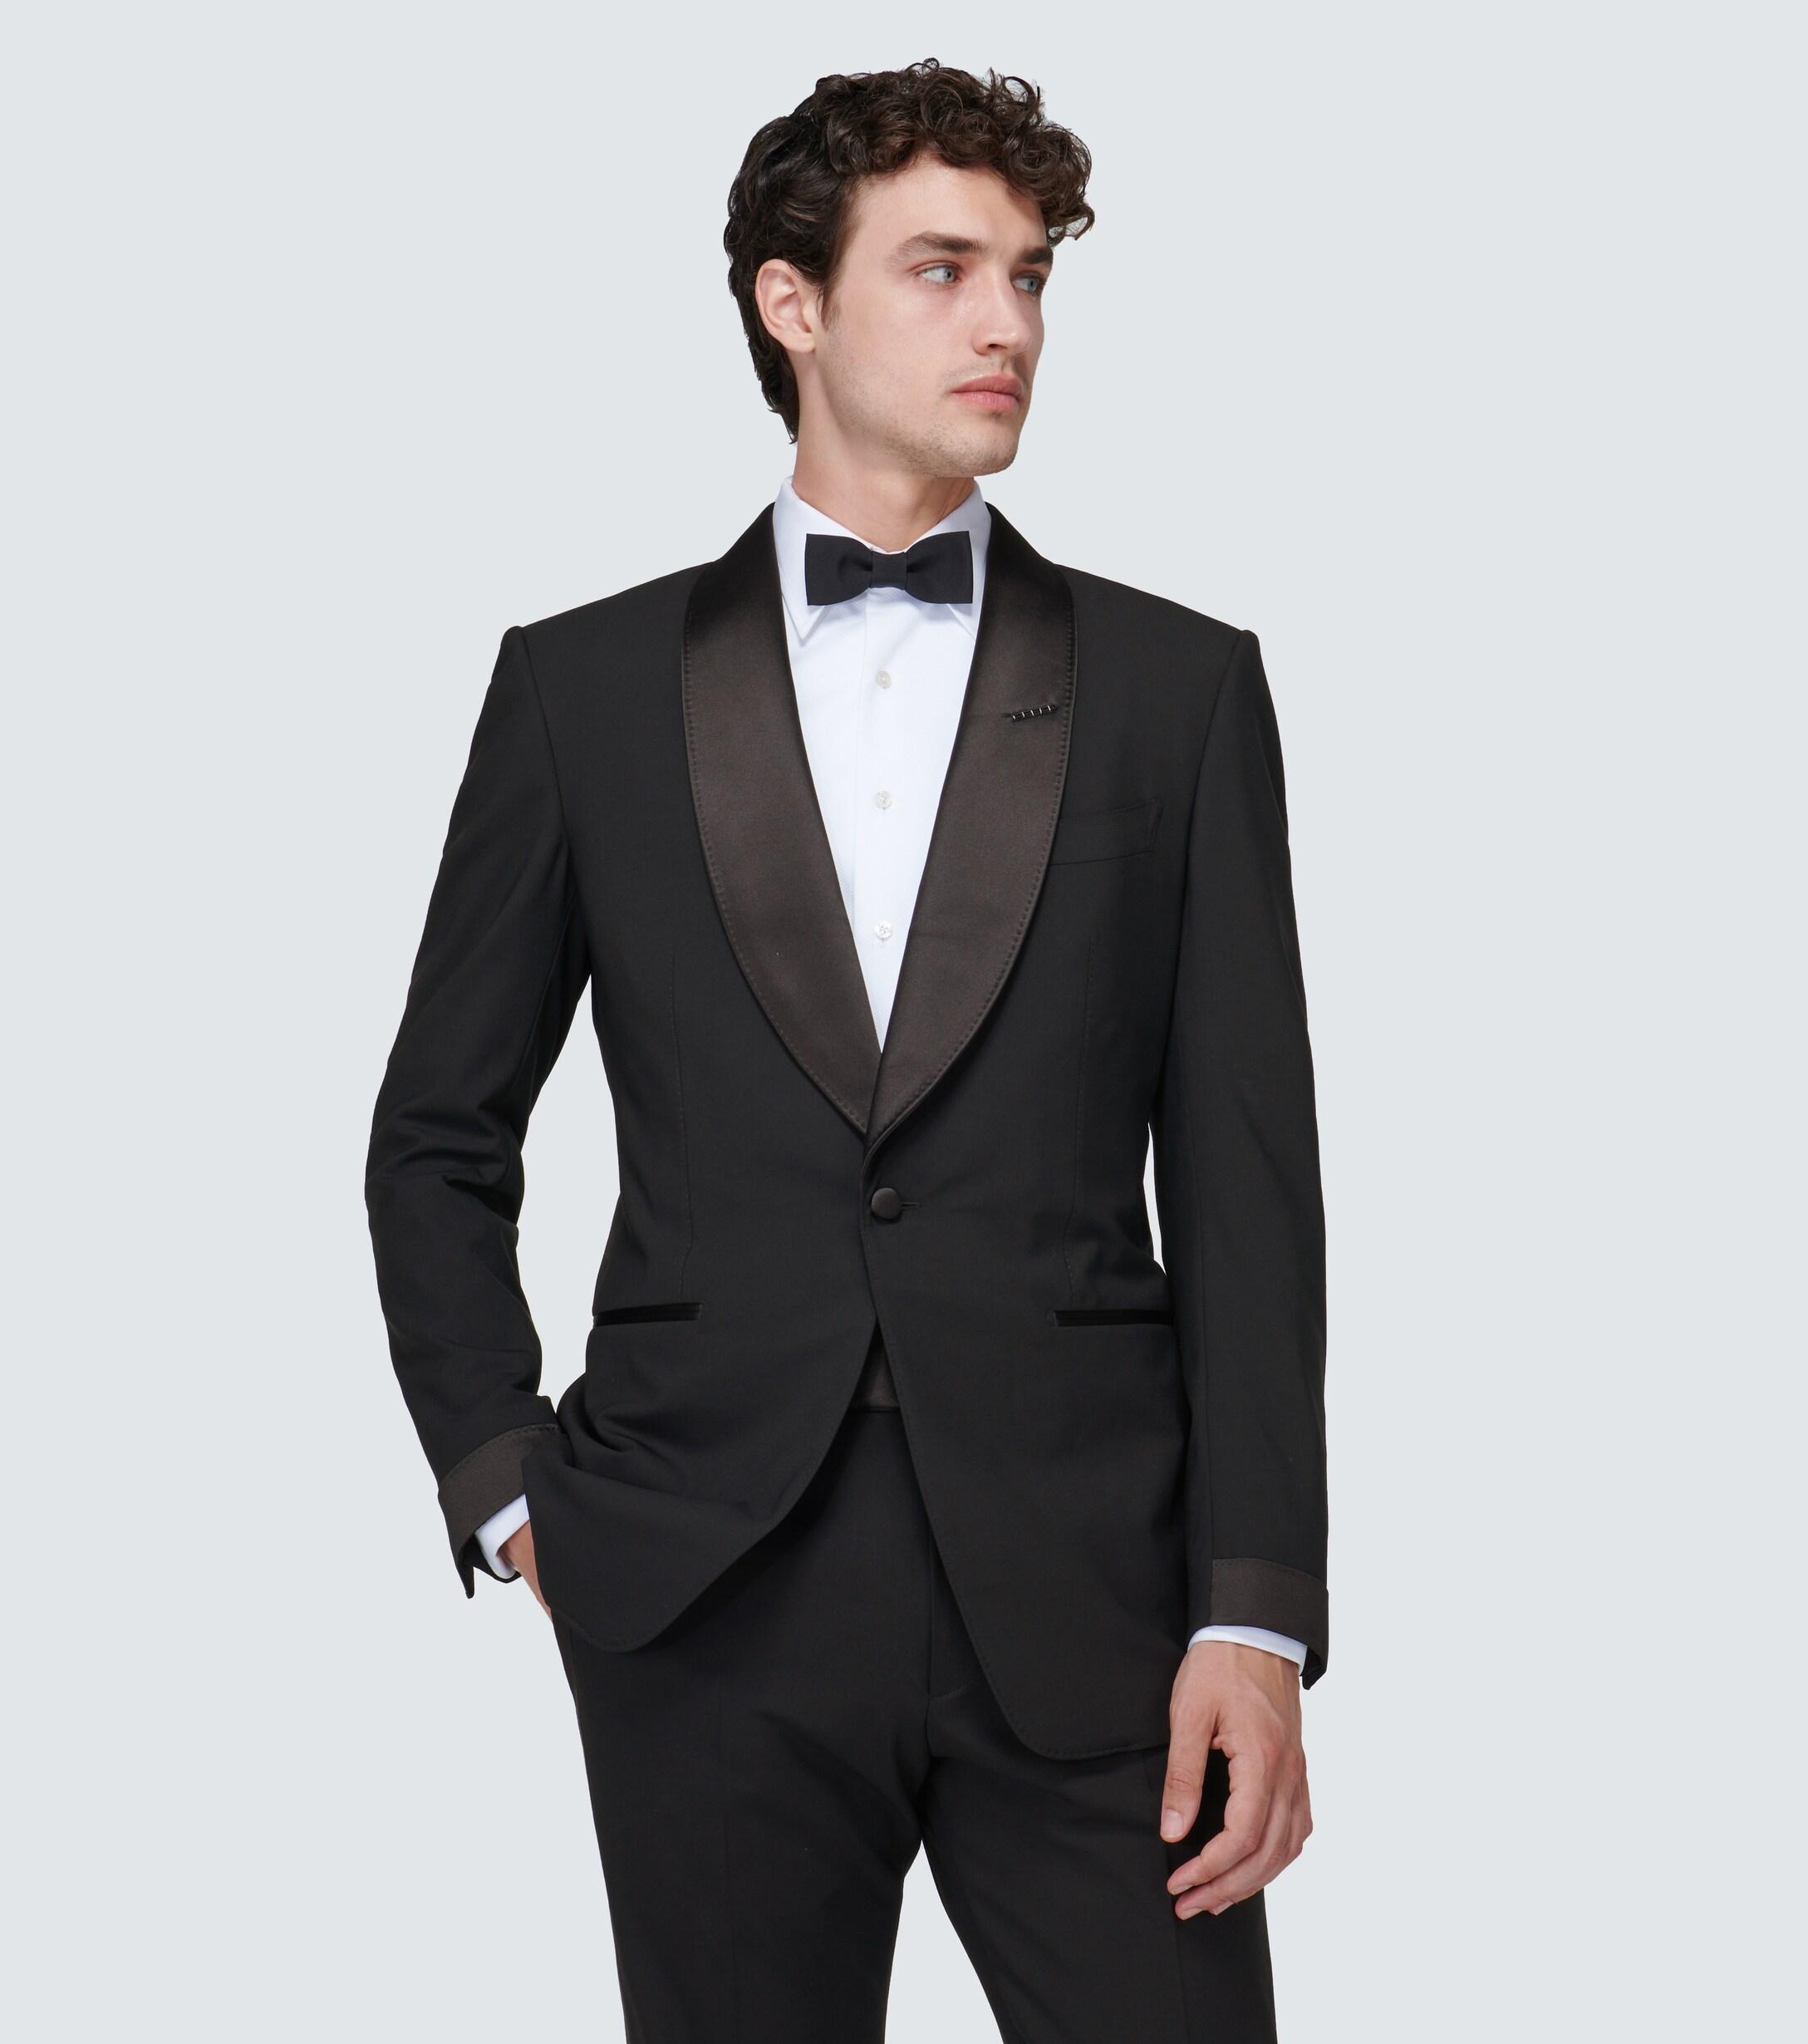 Tom Ford Atticus Shawl-collar Tuxedo in Black for Men - Lyst